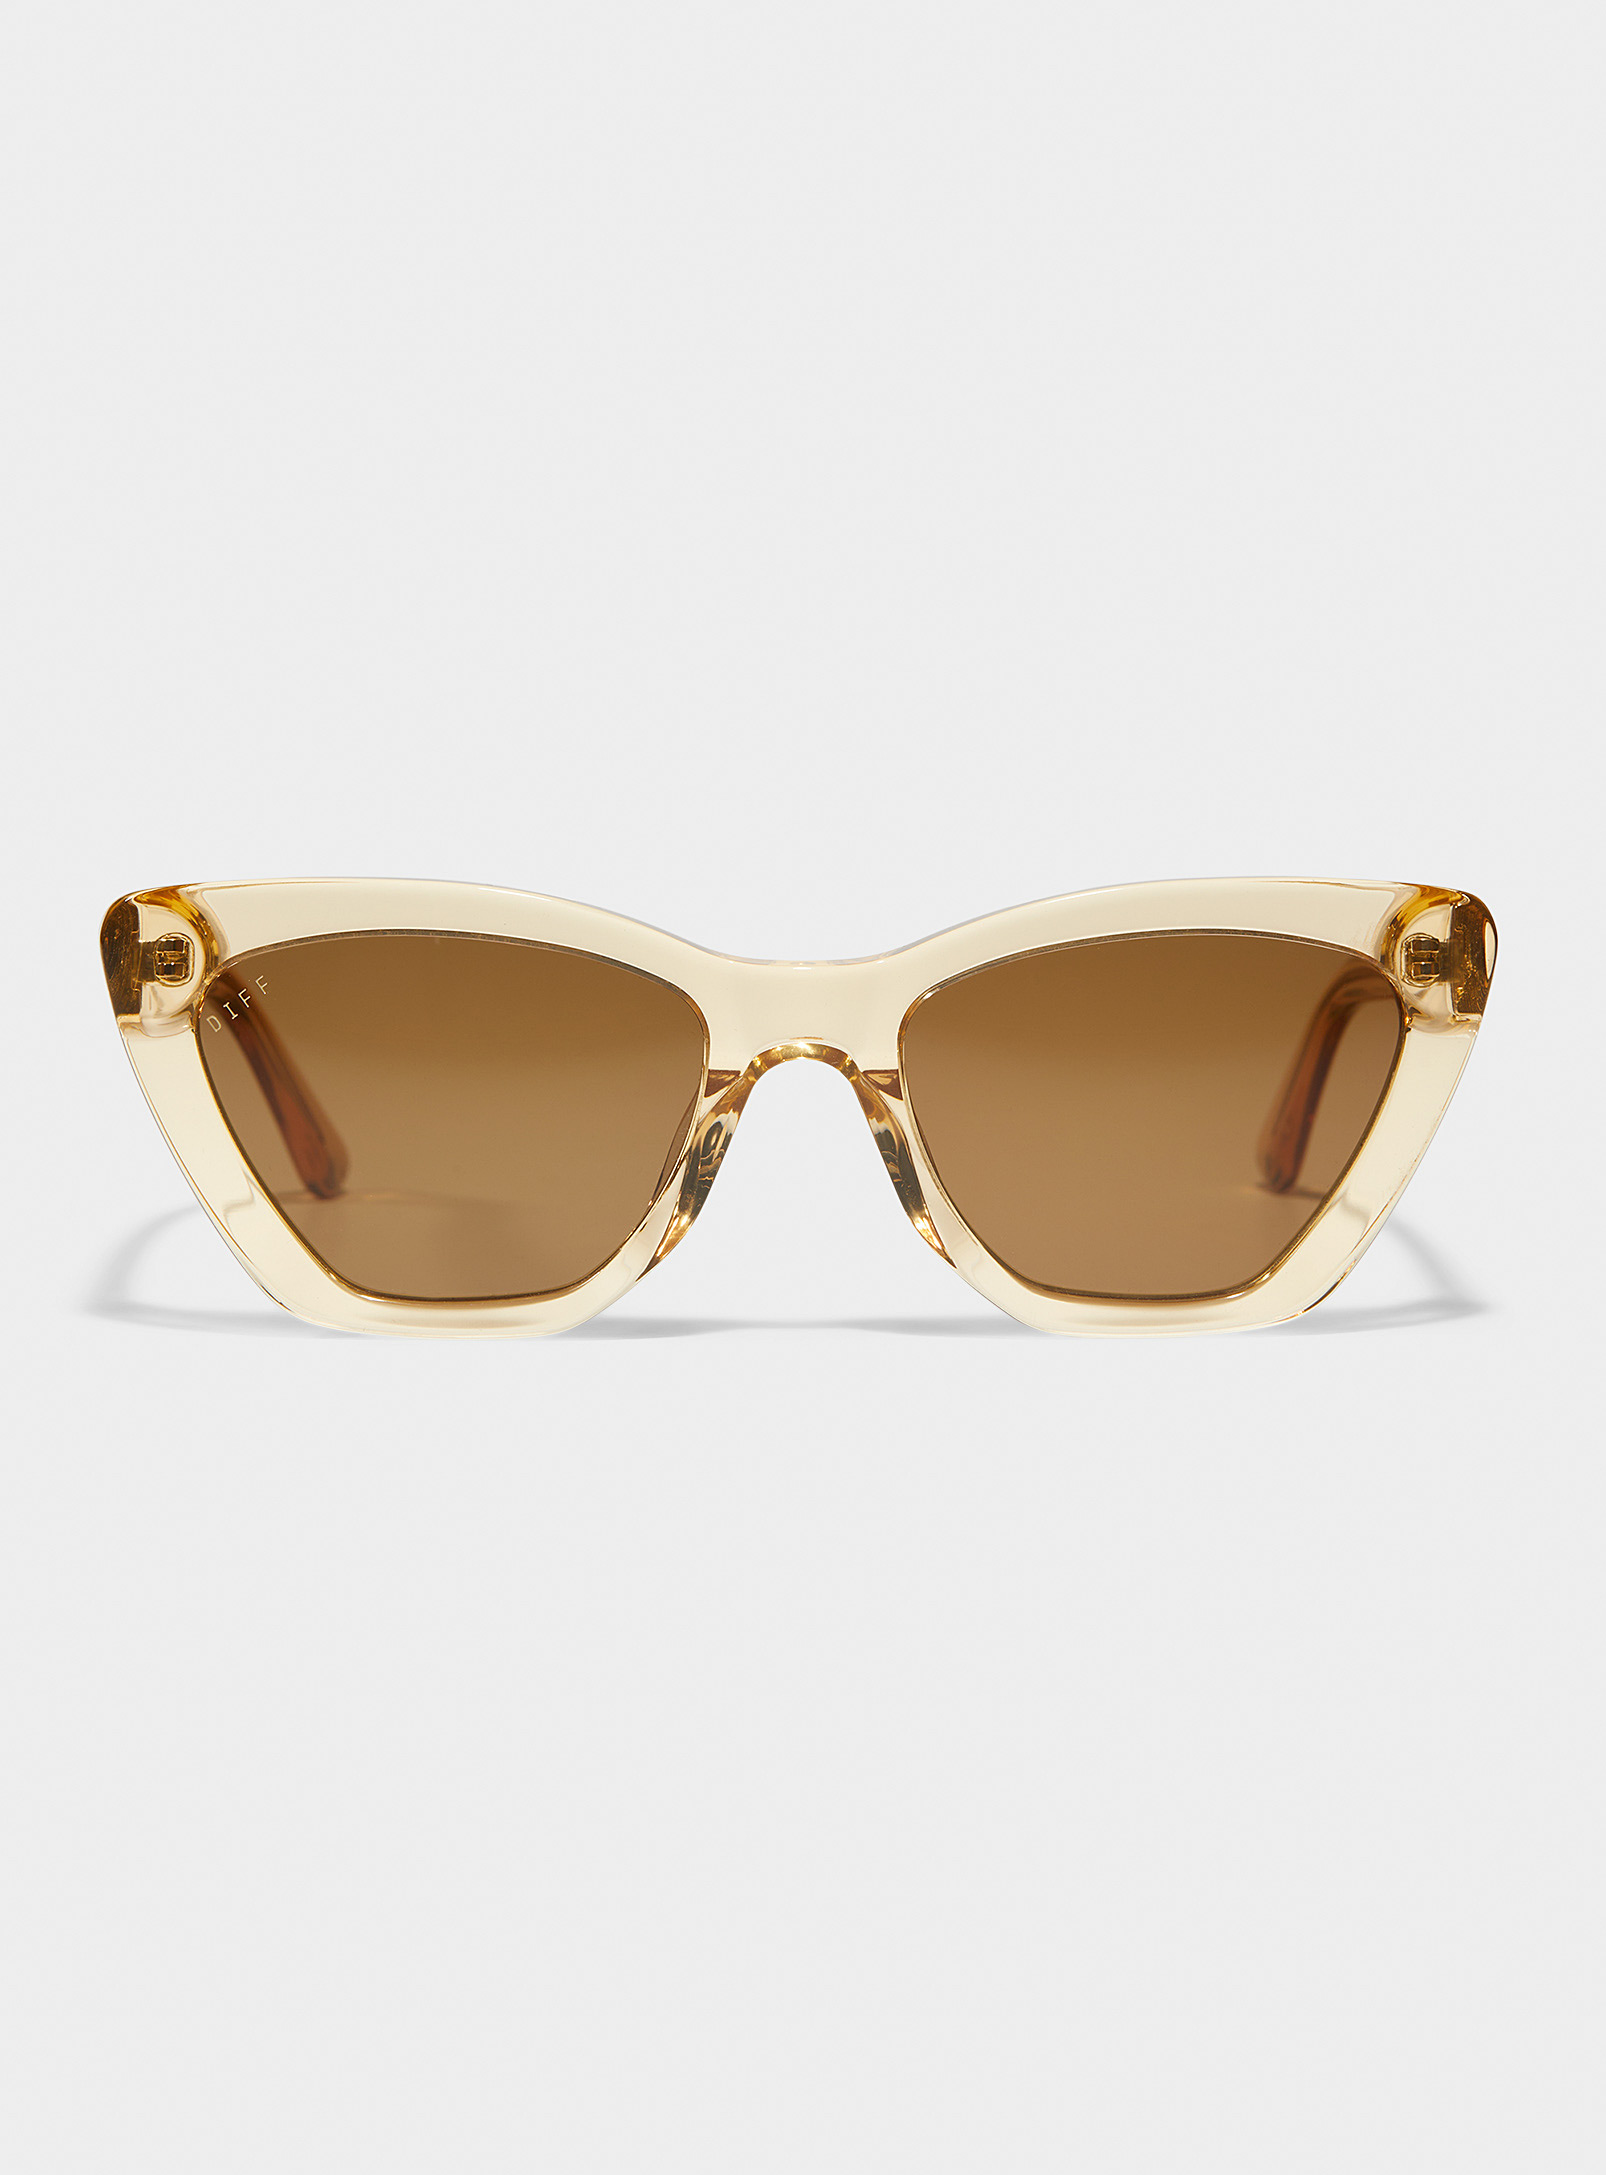 DIFF - Women's Camila rectangular sunglasses